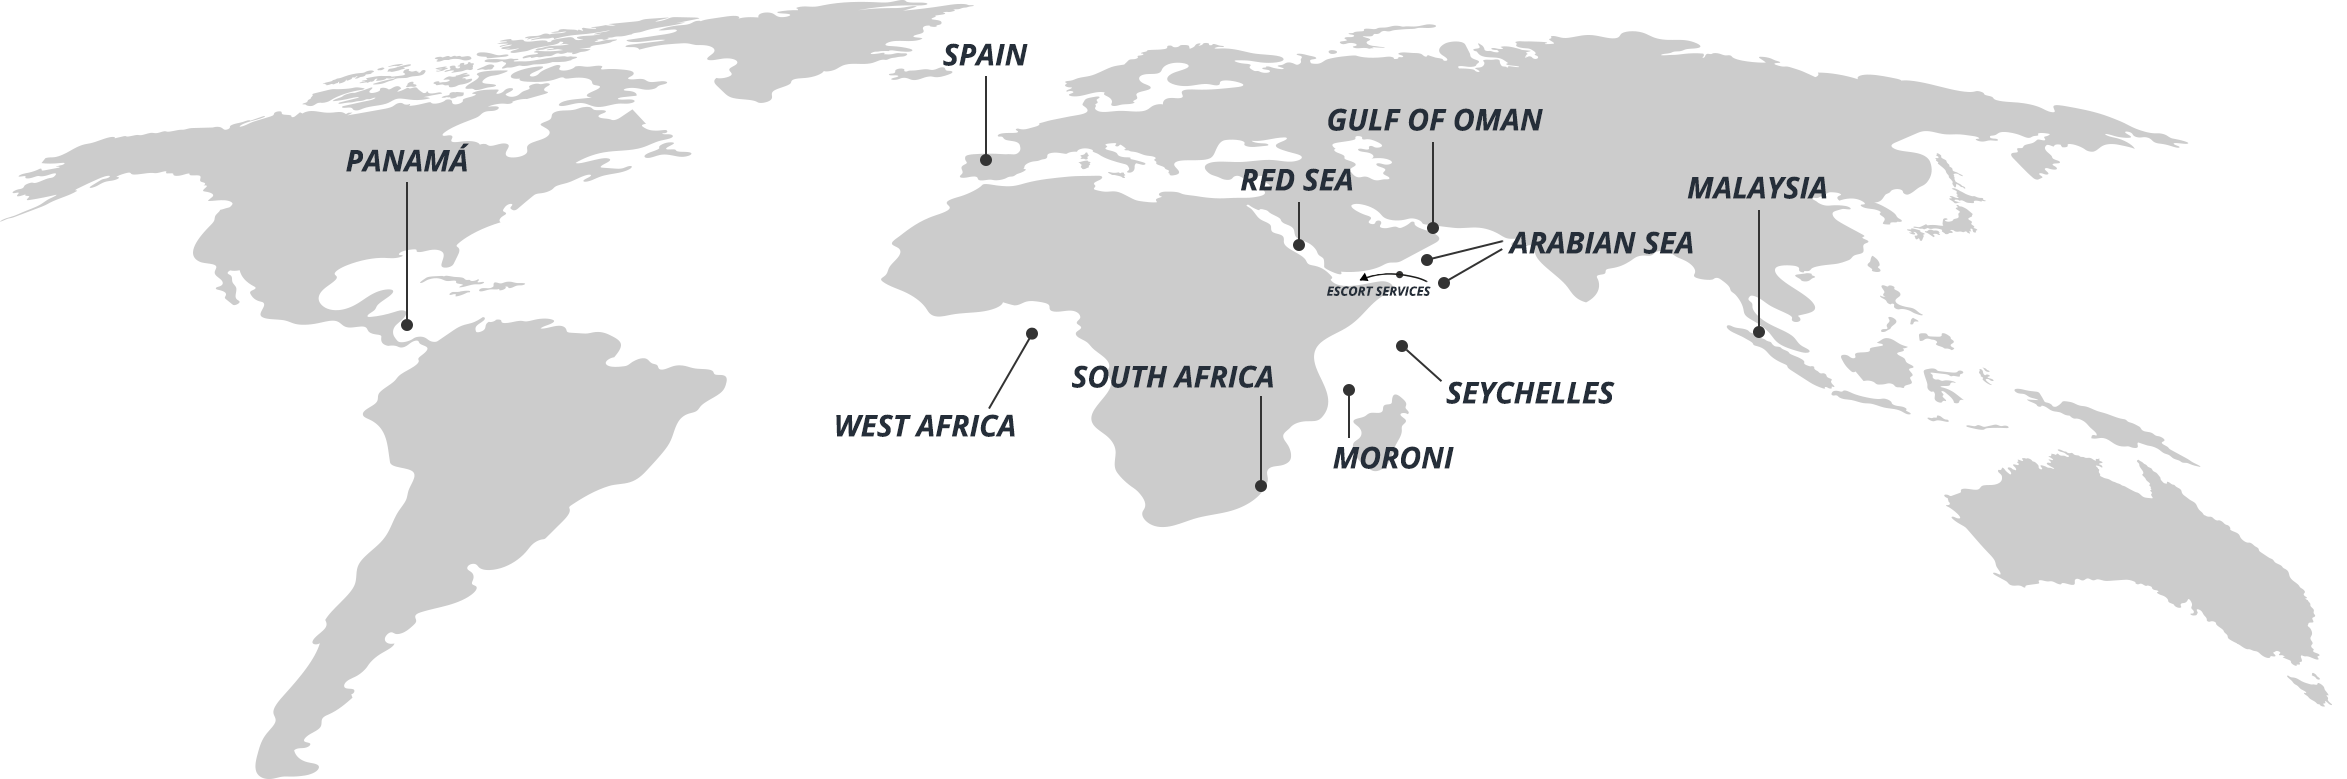 PALM CHARTERS world influence areas around the world